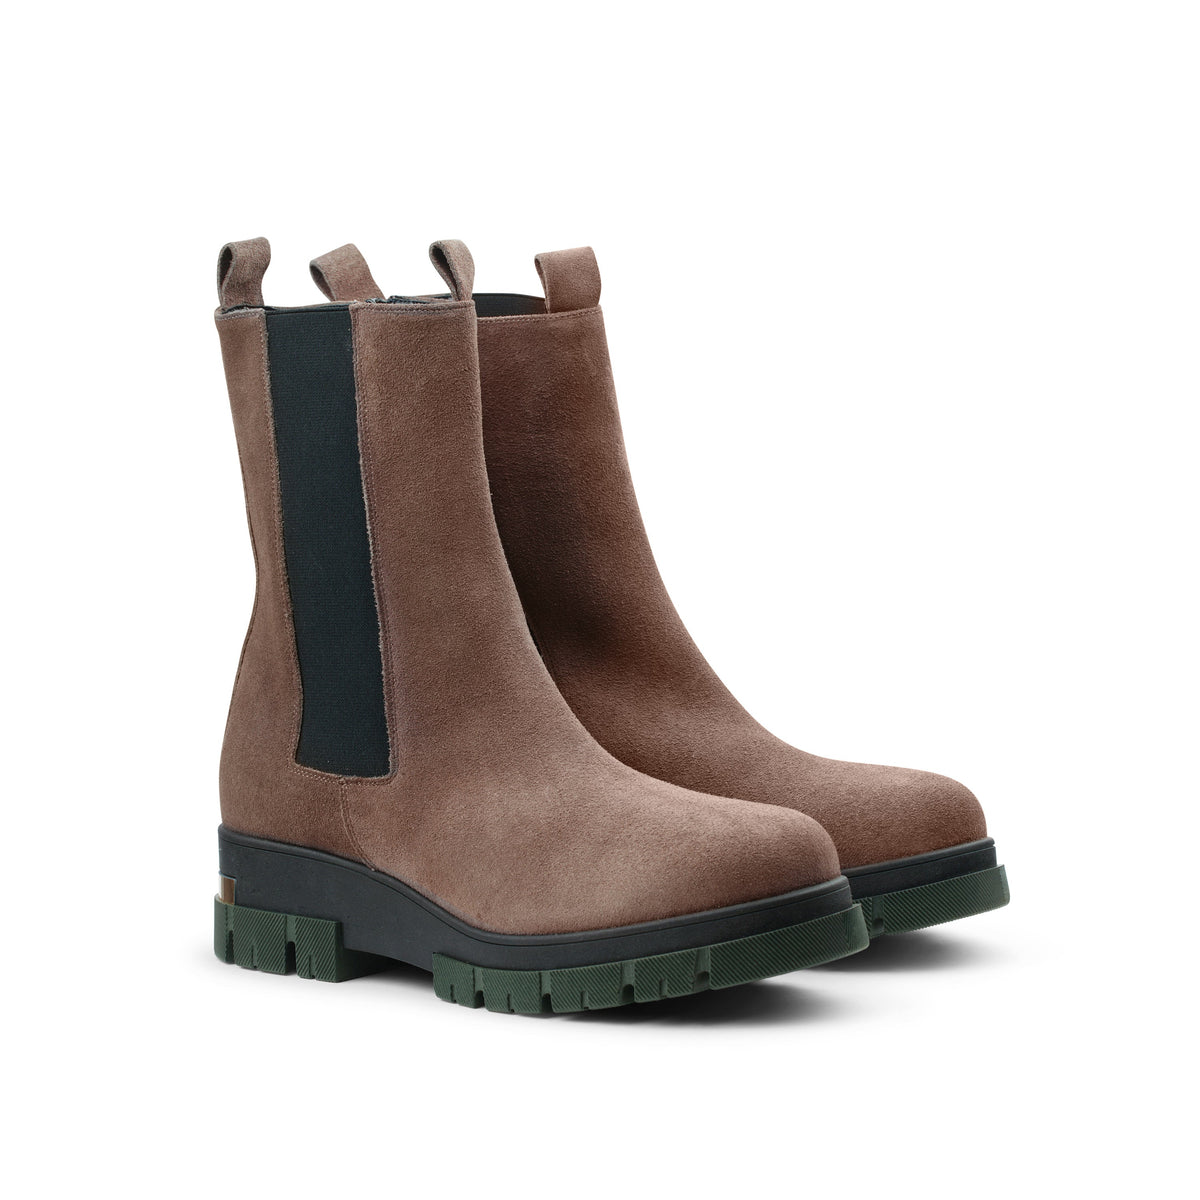 Waterproof Brienza Boots